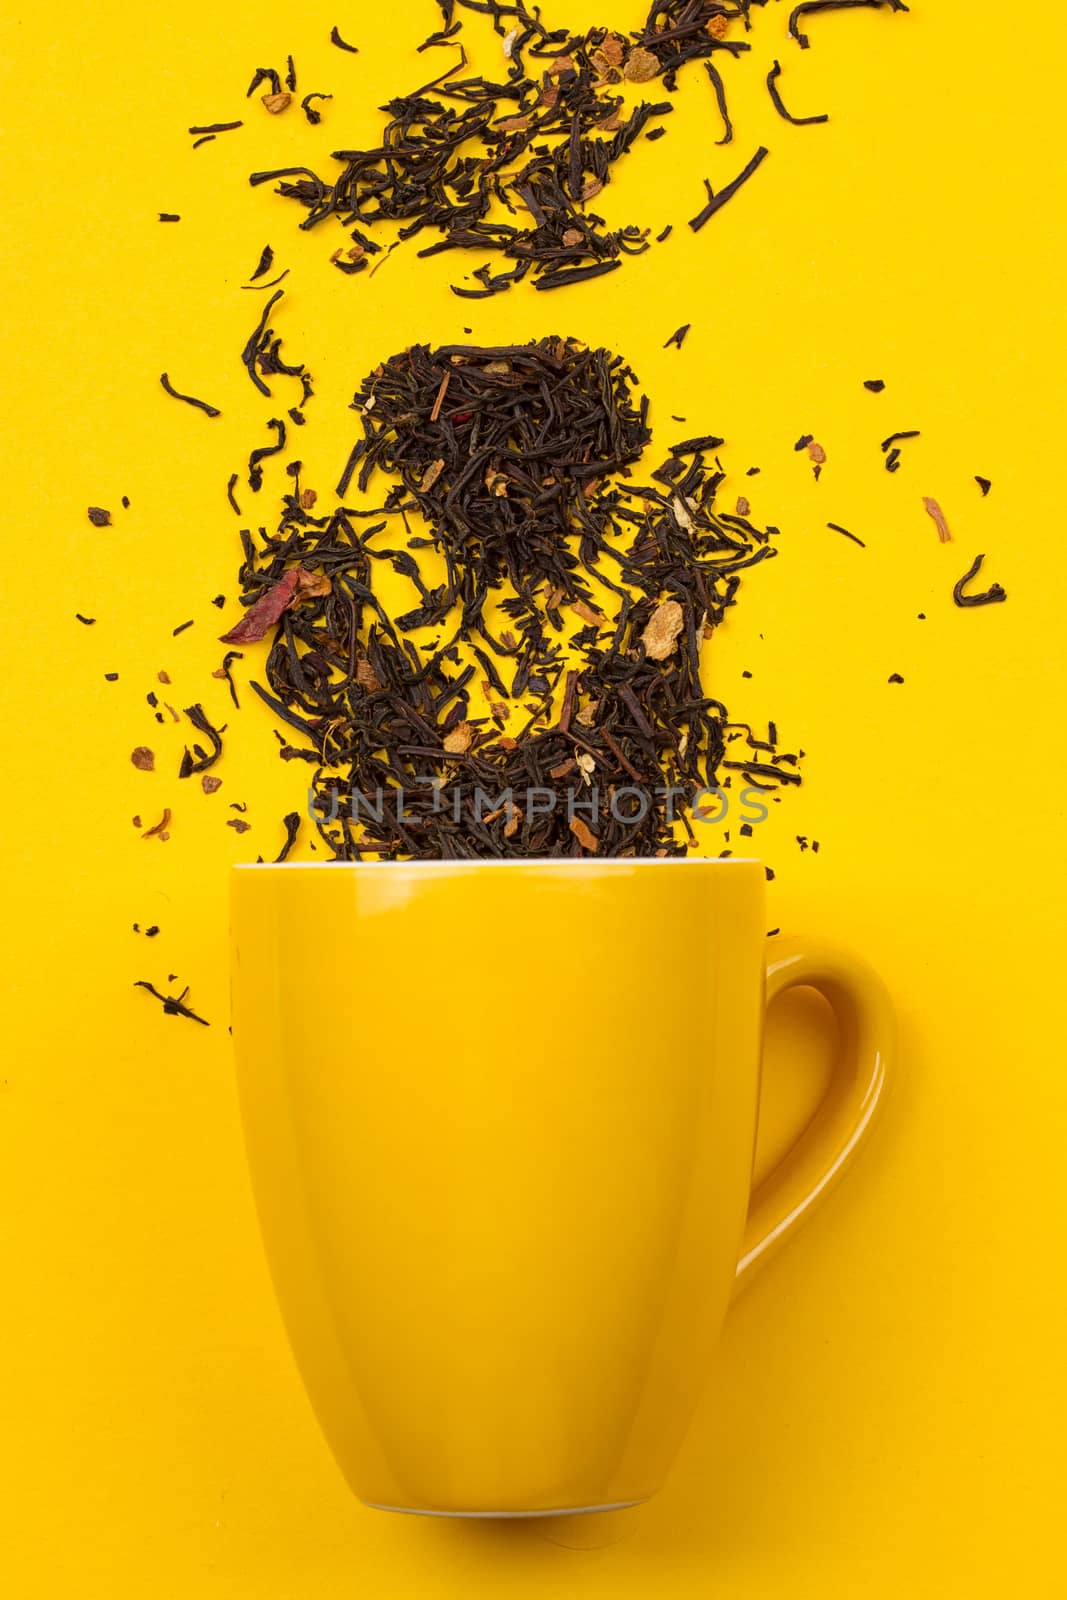 Falling driedn tea by victosha